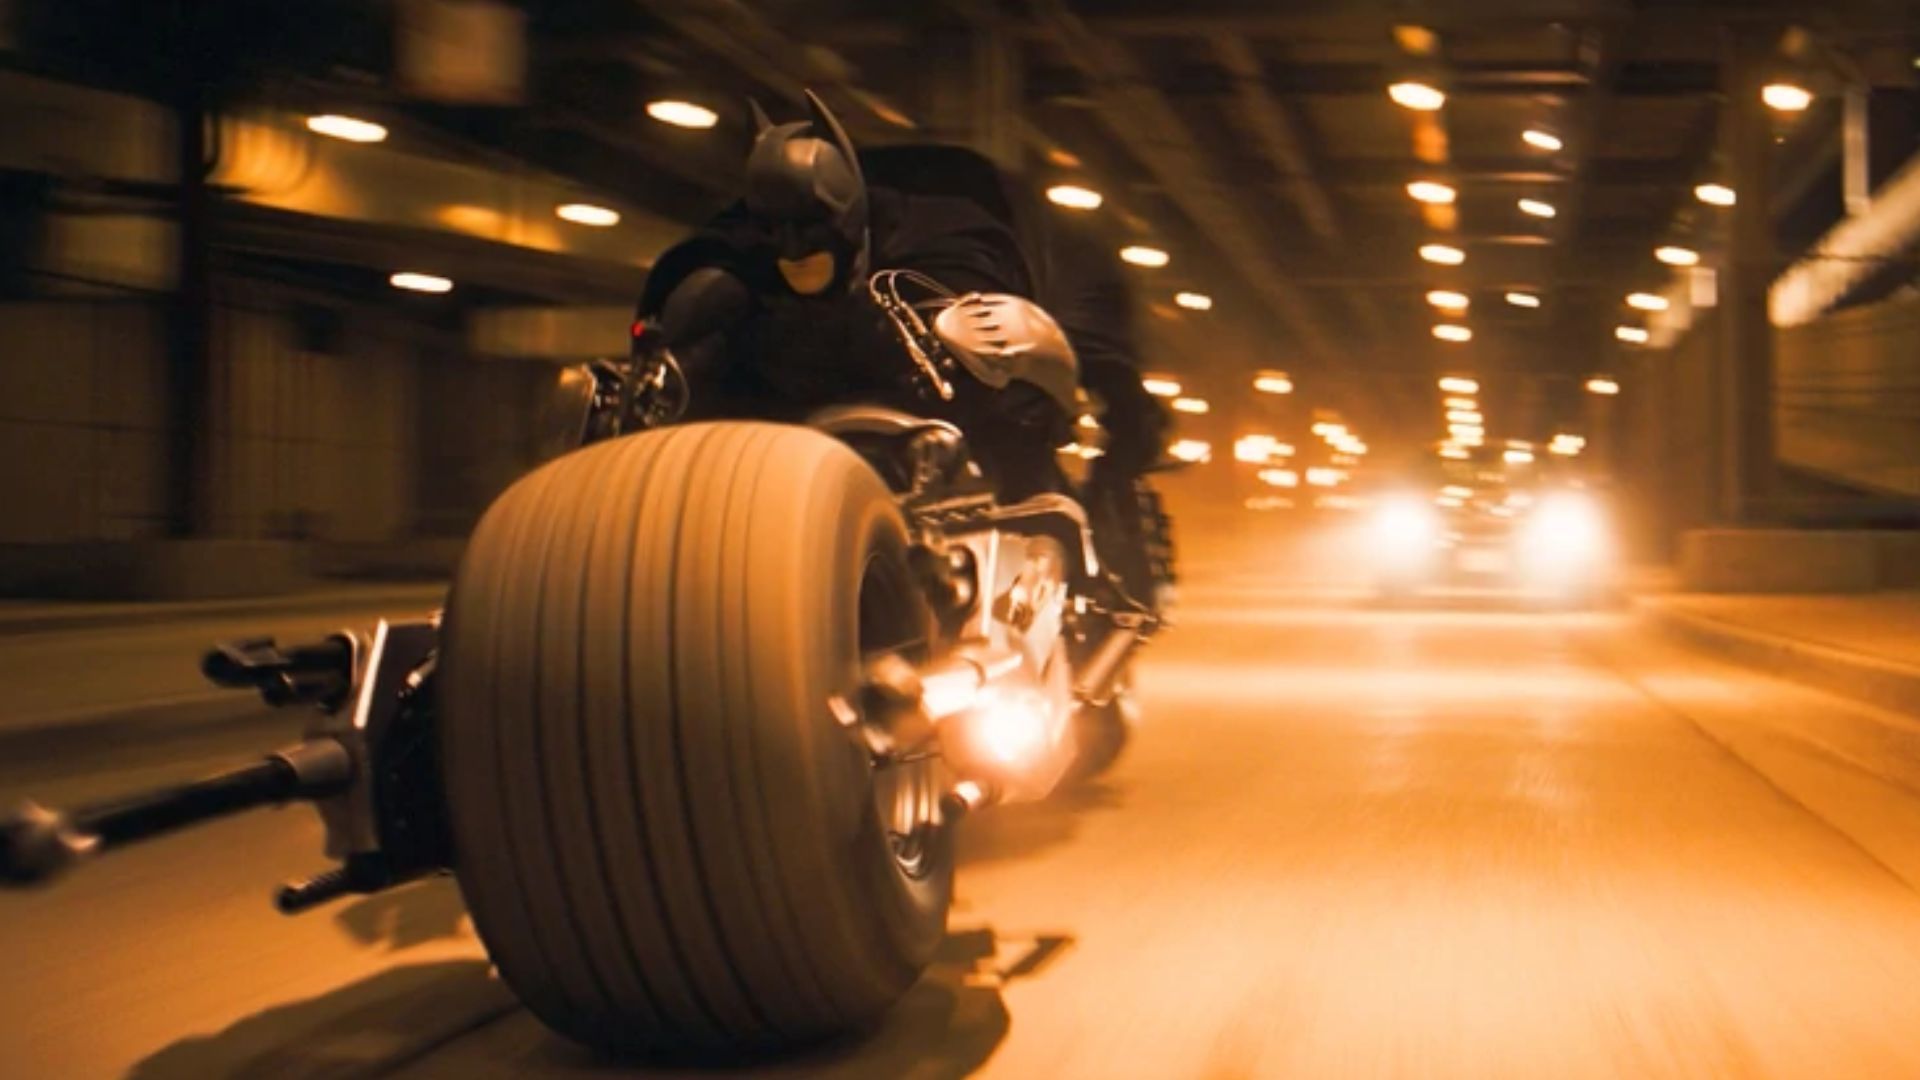 Motorcycle Monday: The Batpod